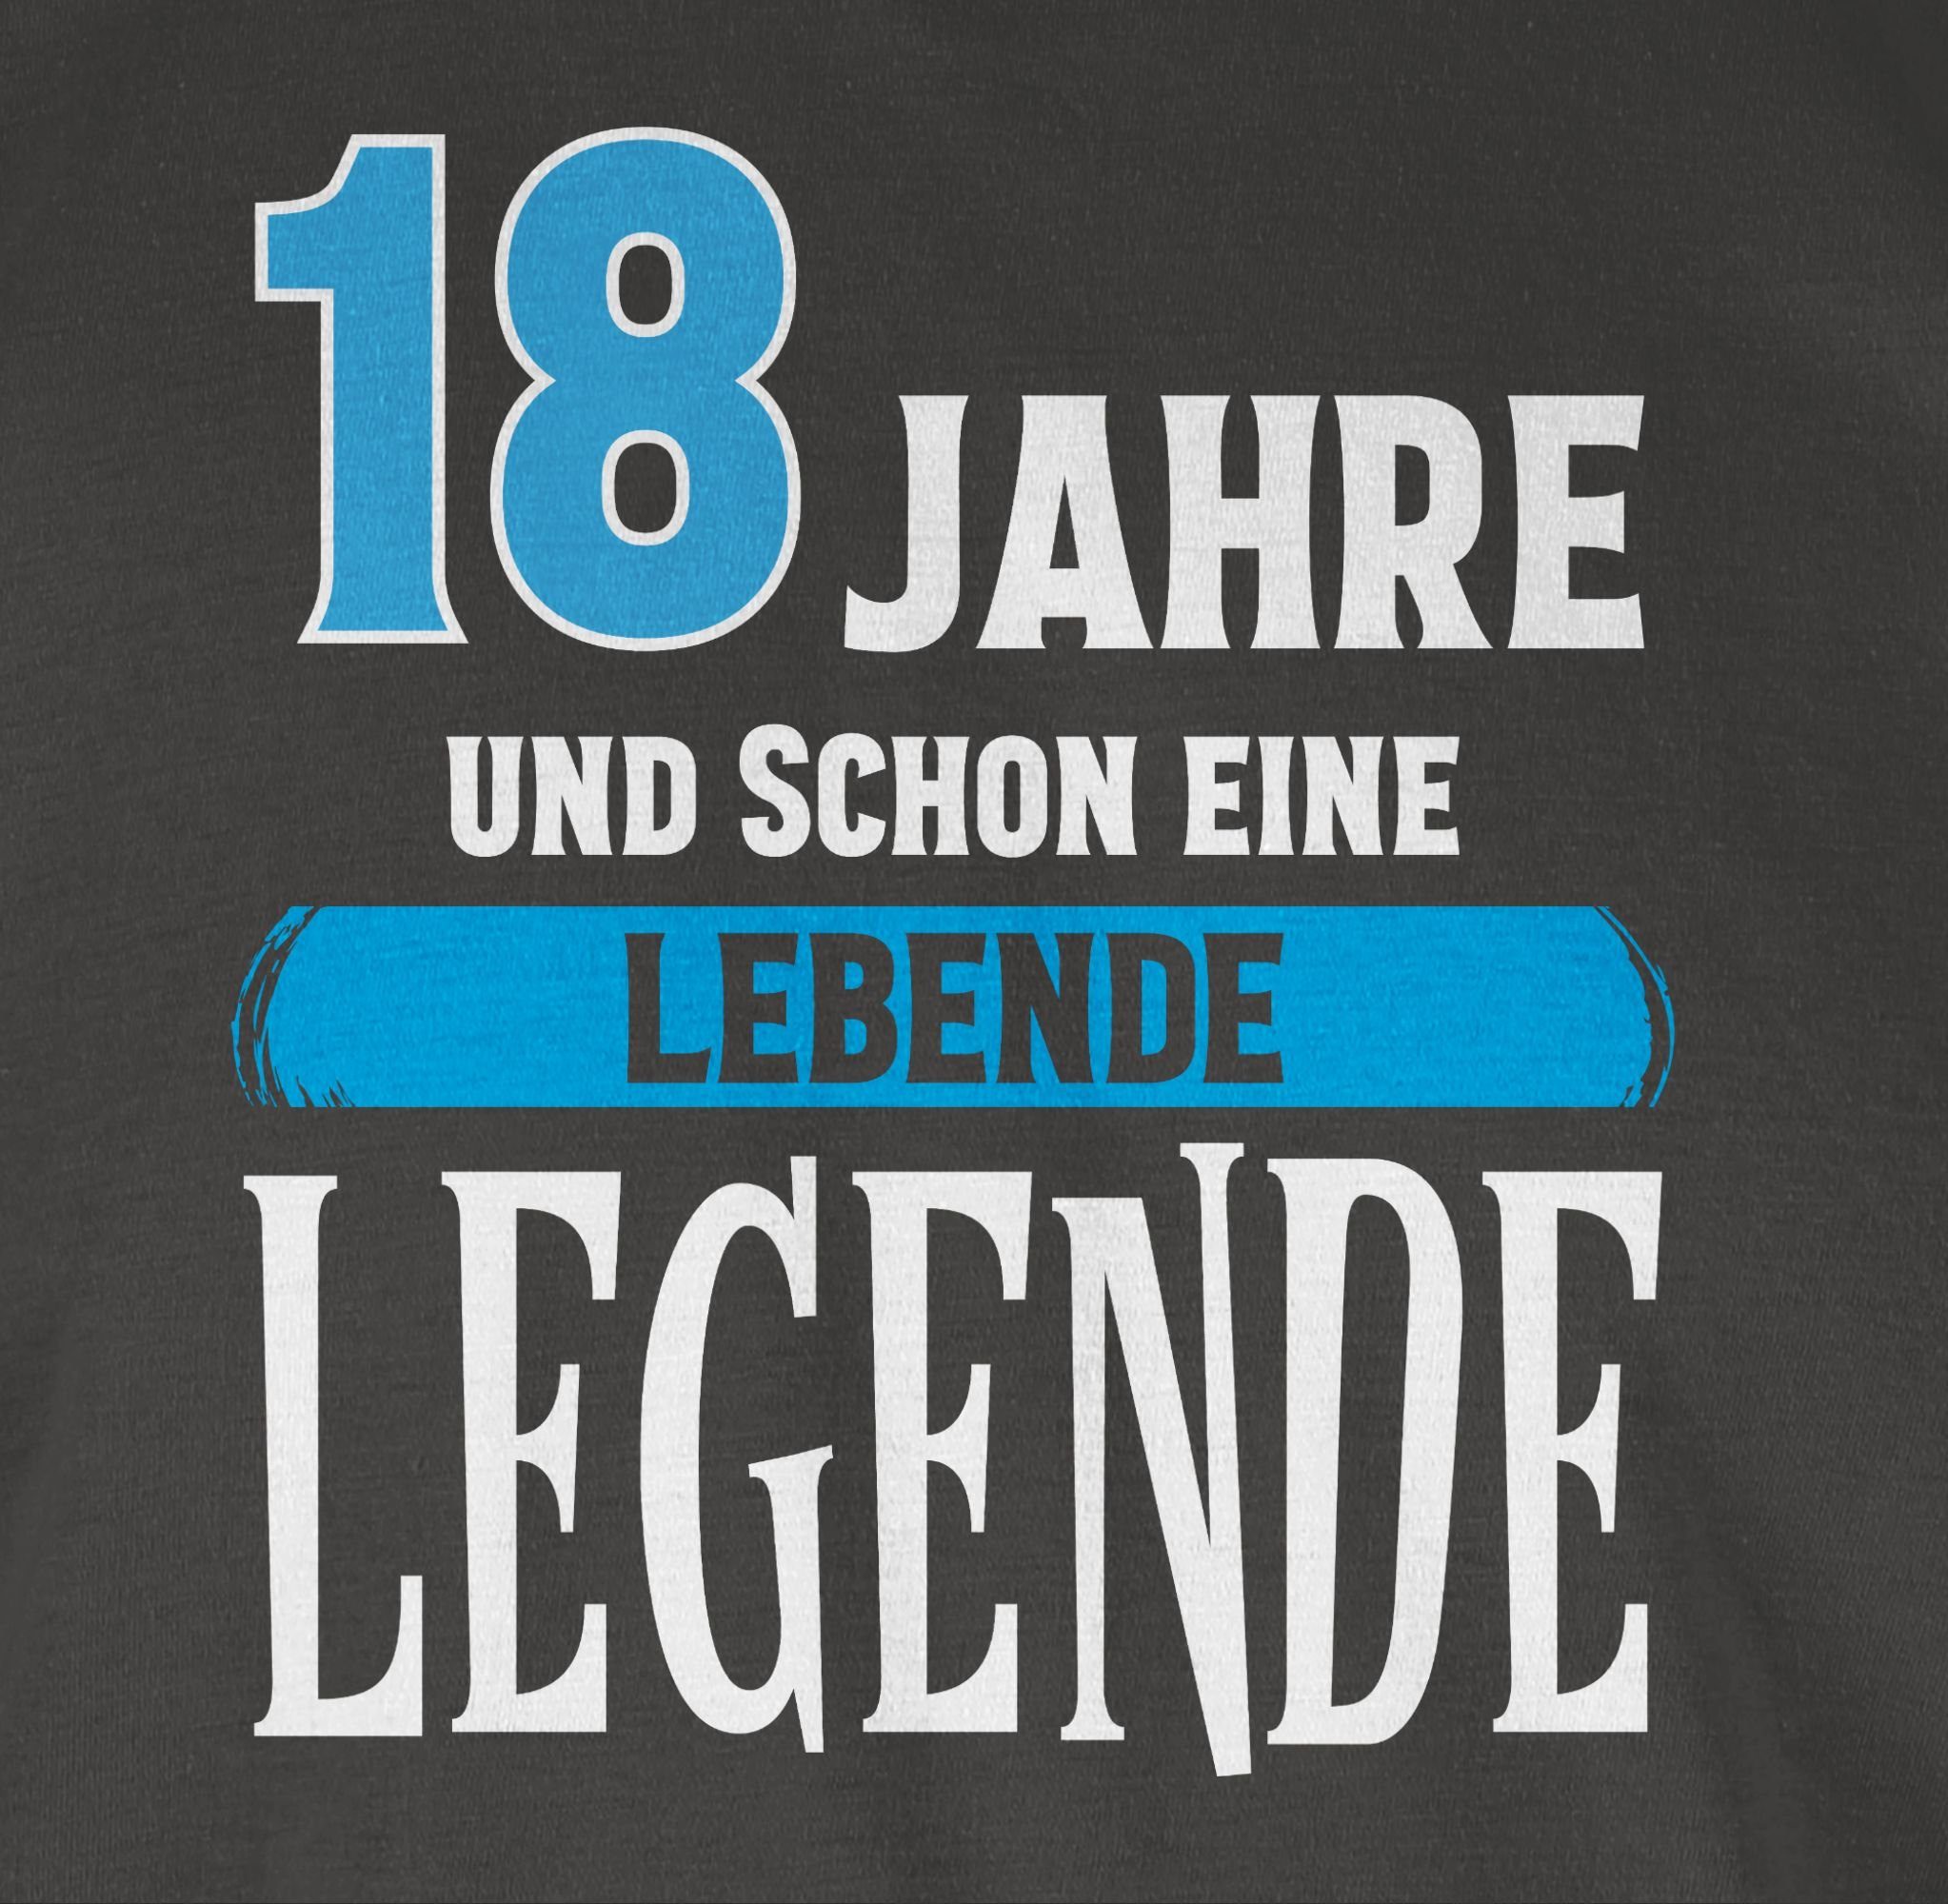 Shirtracer T-Shirt Achtzehnter Legende Dunkelgrau 18. 3 Geburtstag